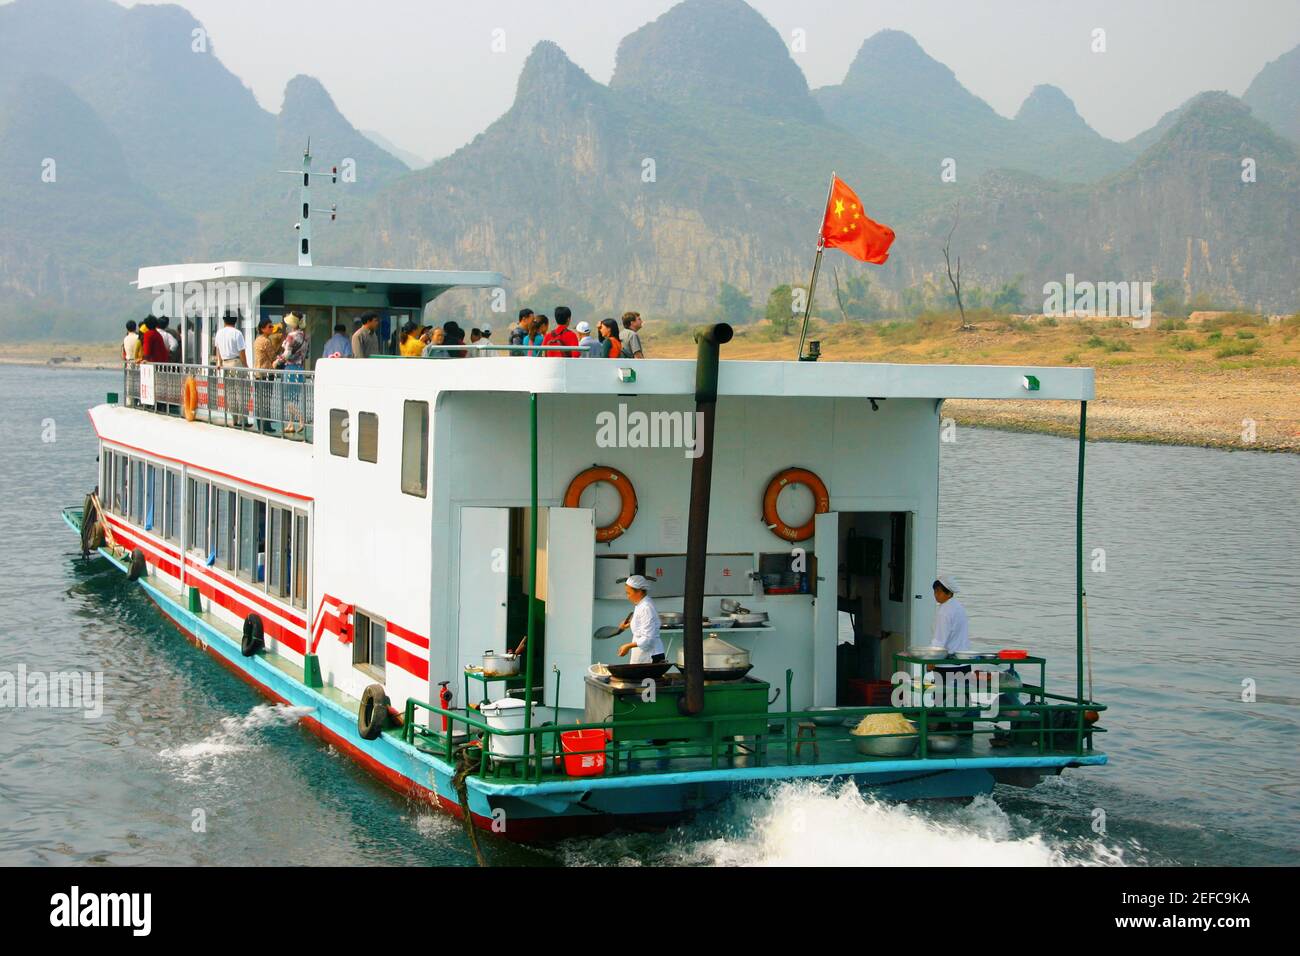 Tourists on a tourboat, Li River, Guilin, China Stock Photo